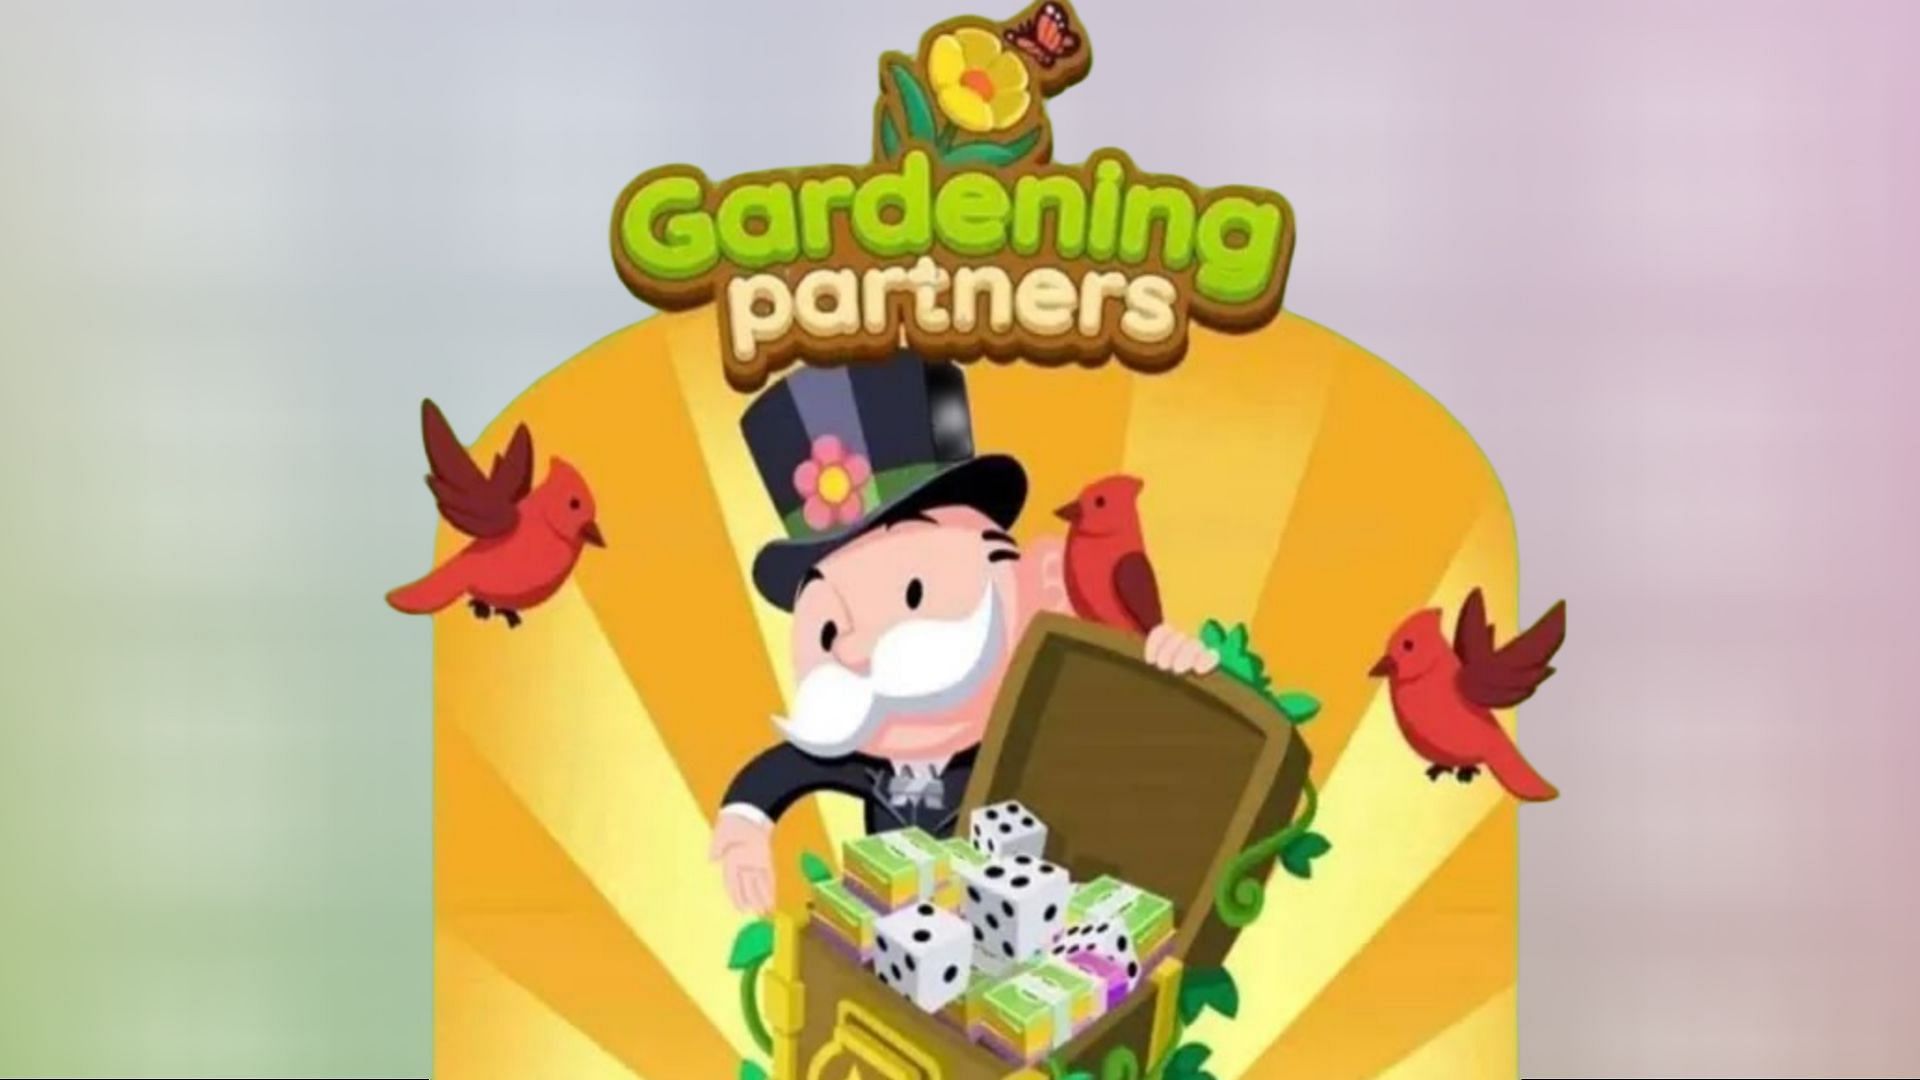 Monopoly Go Gardening Partners event offers stunning rewards (Image via Scopely) 